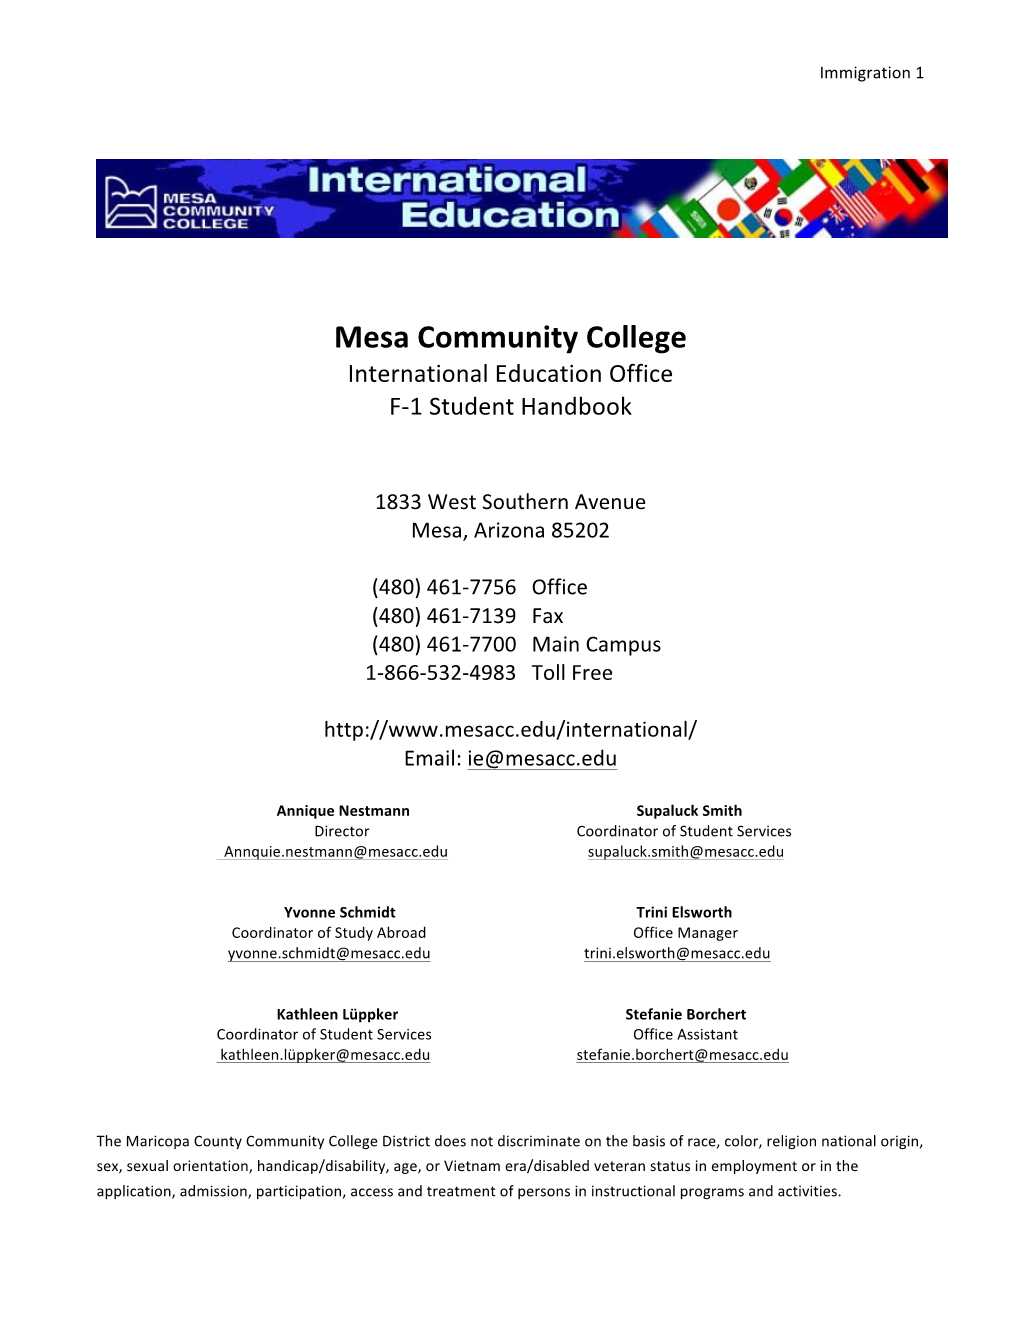 Mesa Community College International Education Office F-1 Student Handbook